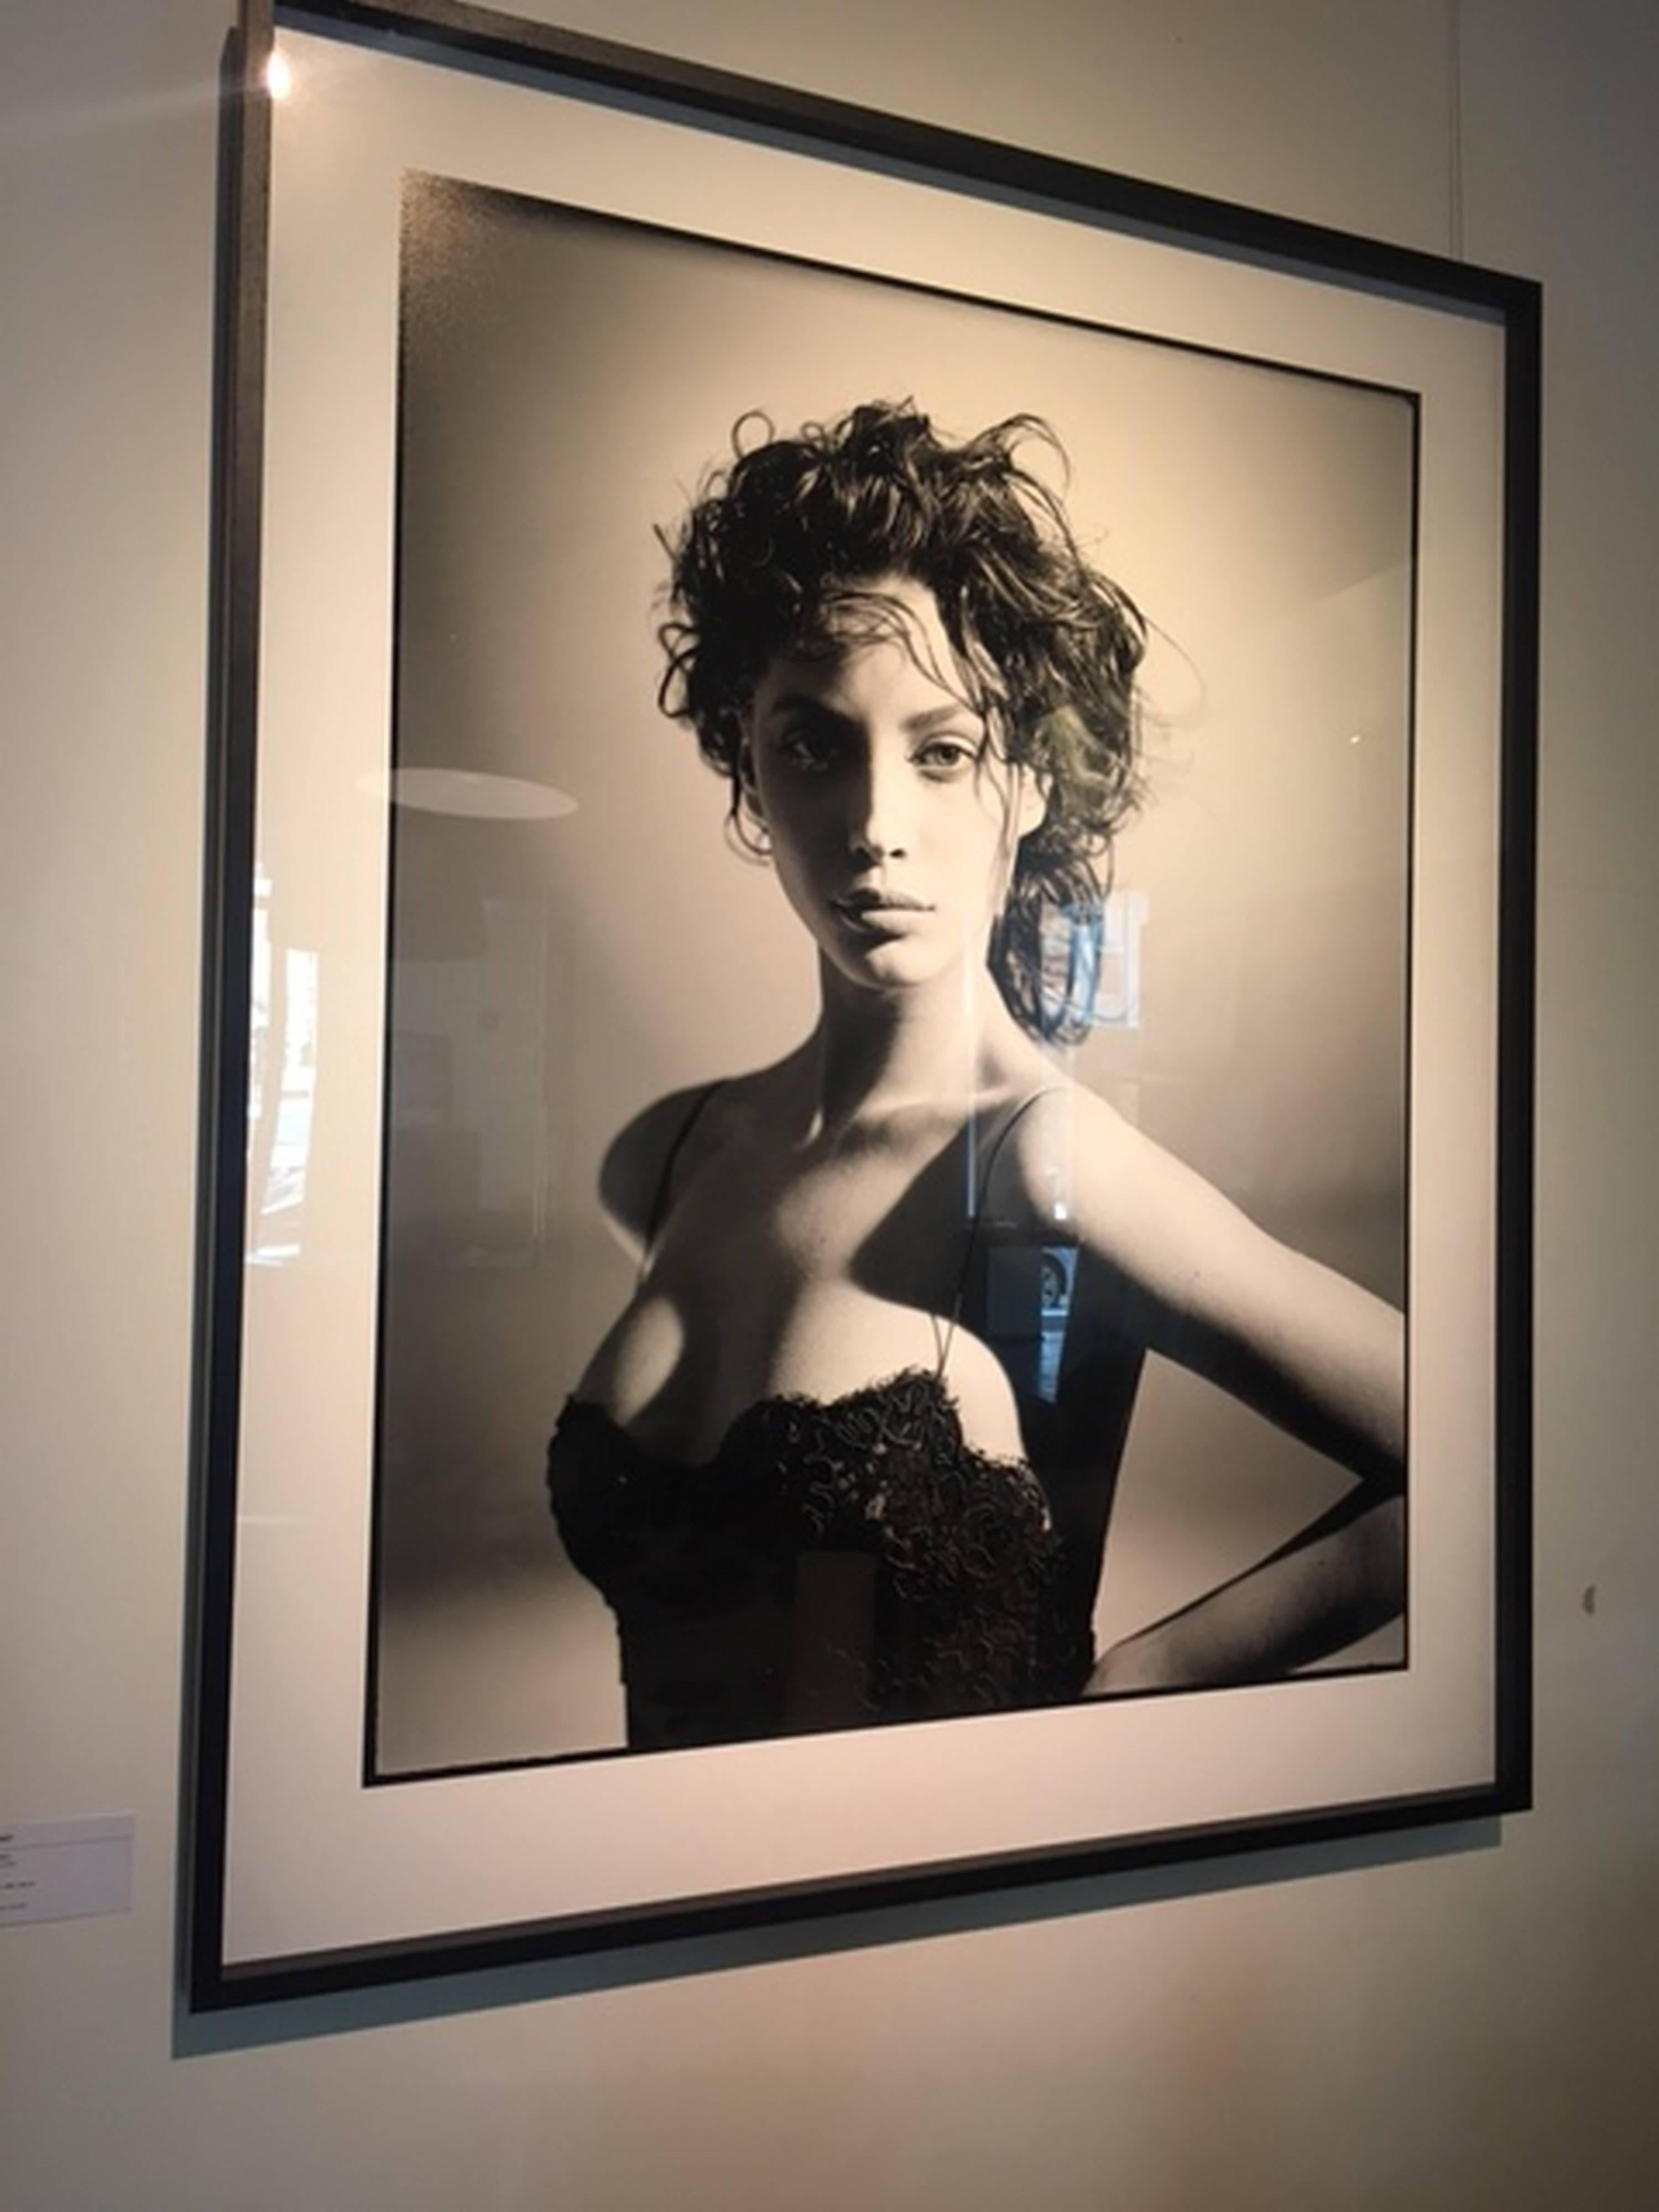 Christy Turlington - b&w portrait in black lace, fine art photography, 1987 - Photograph by Arthur Elgort